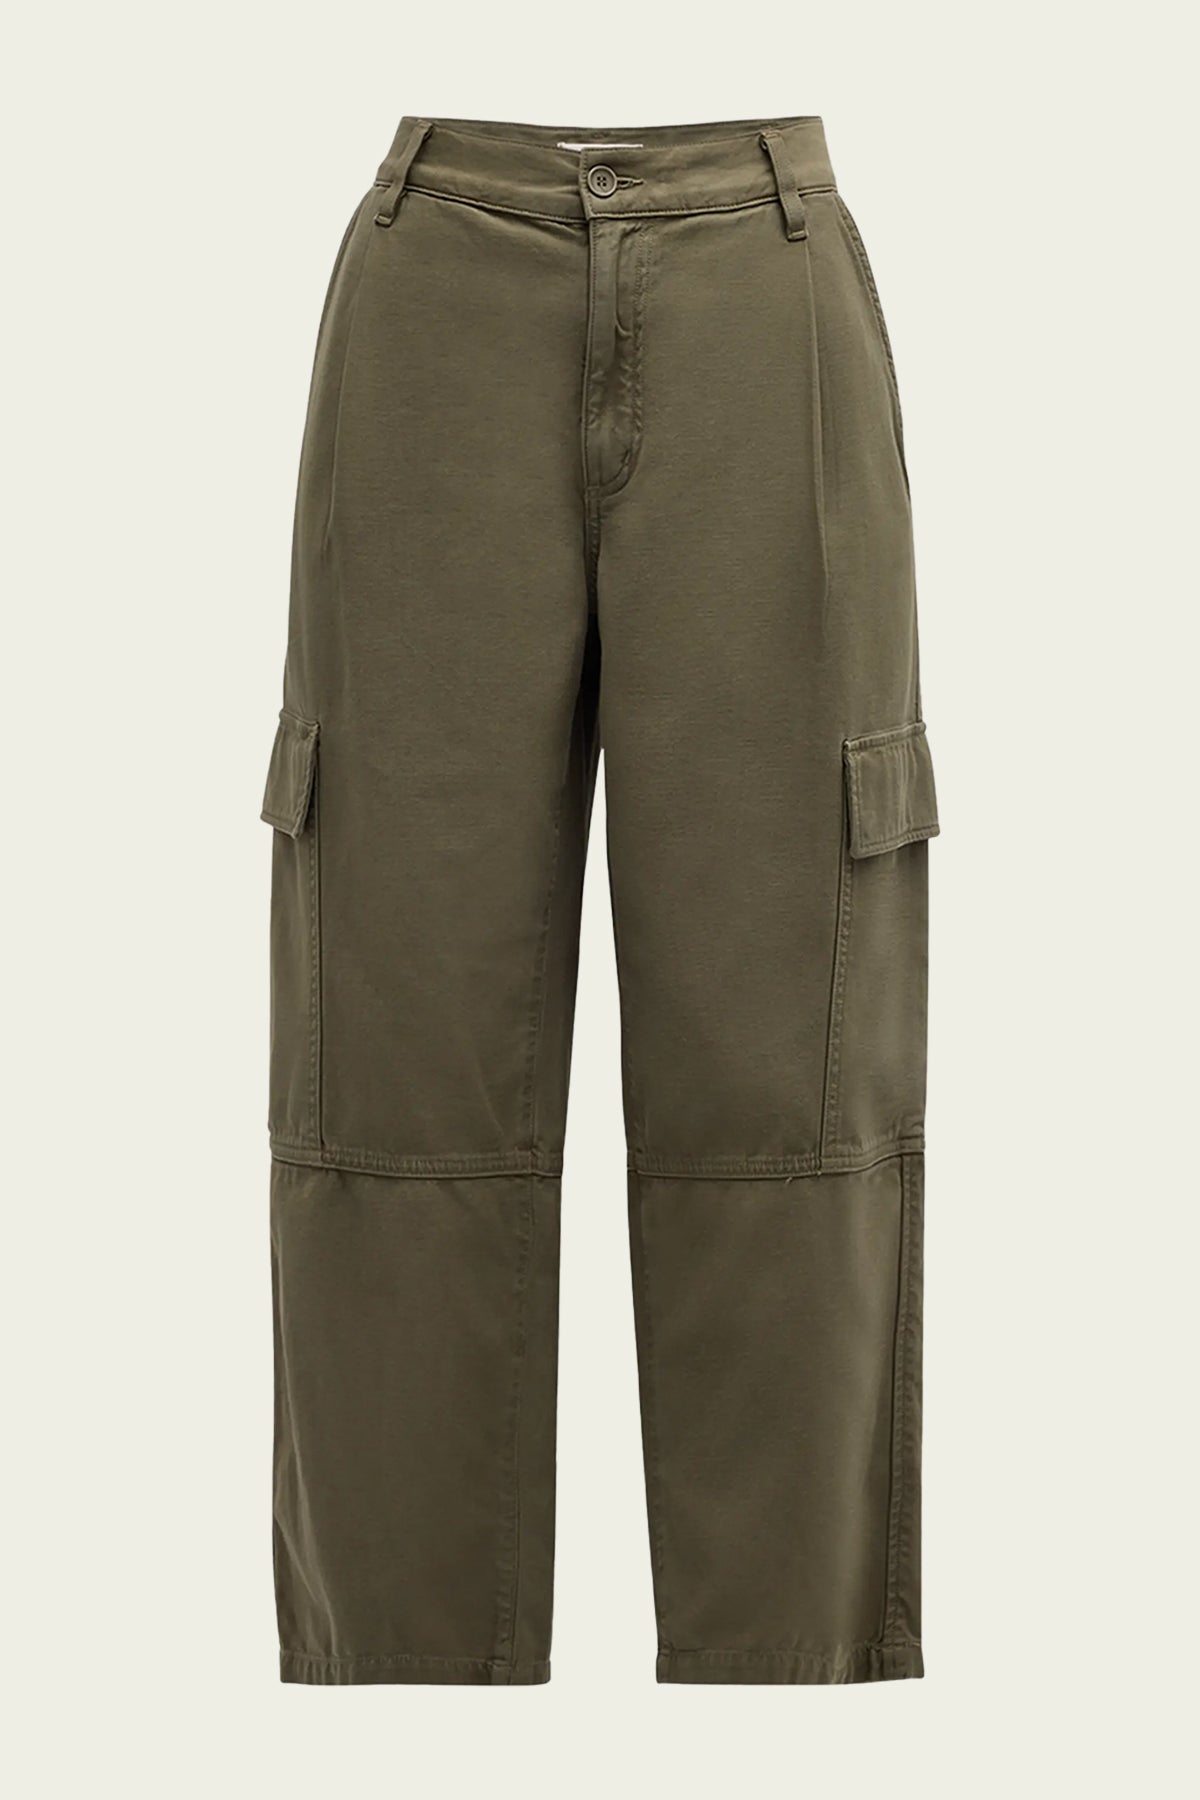 Jericho Cropped Cargo Pants in Fatigue - shop-olivia.com